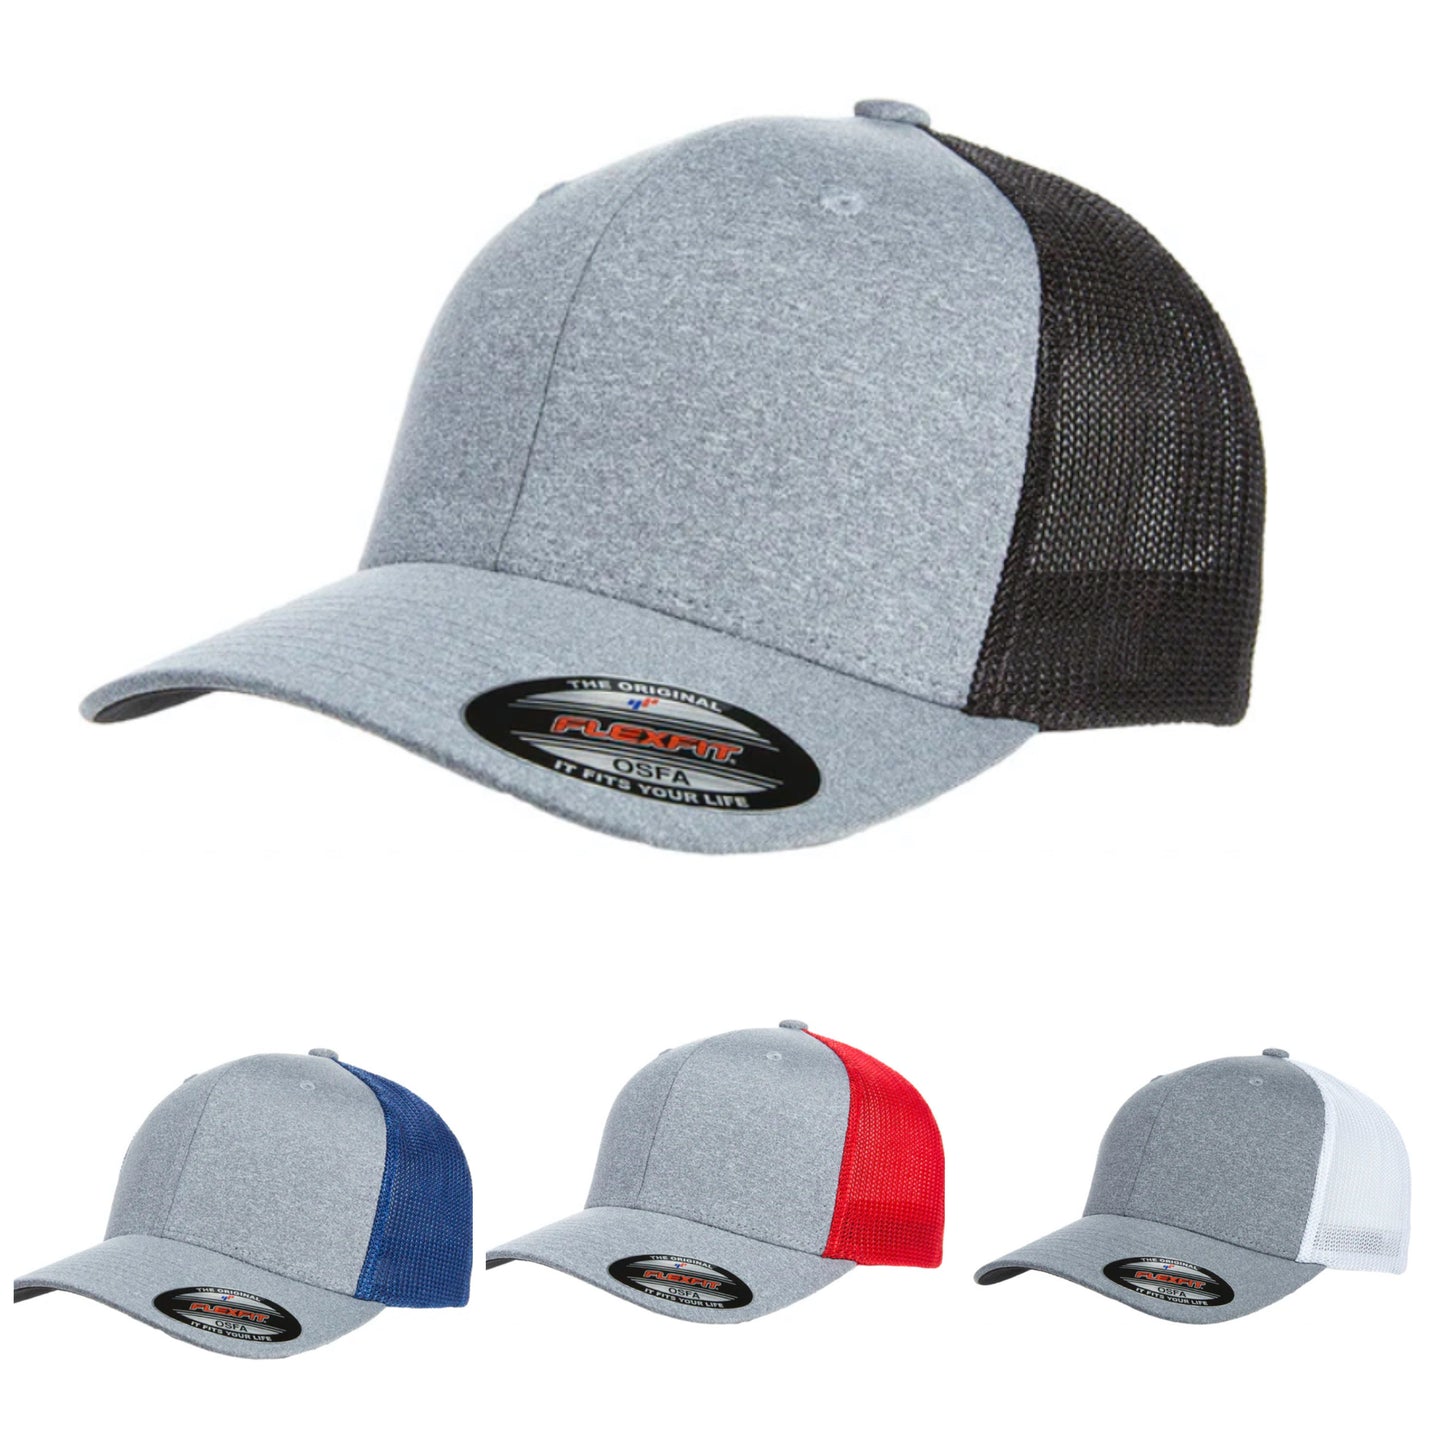 Black Design Dad Hat (Choose your custom dad name!)